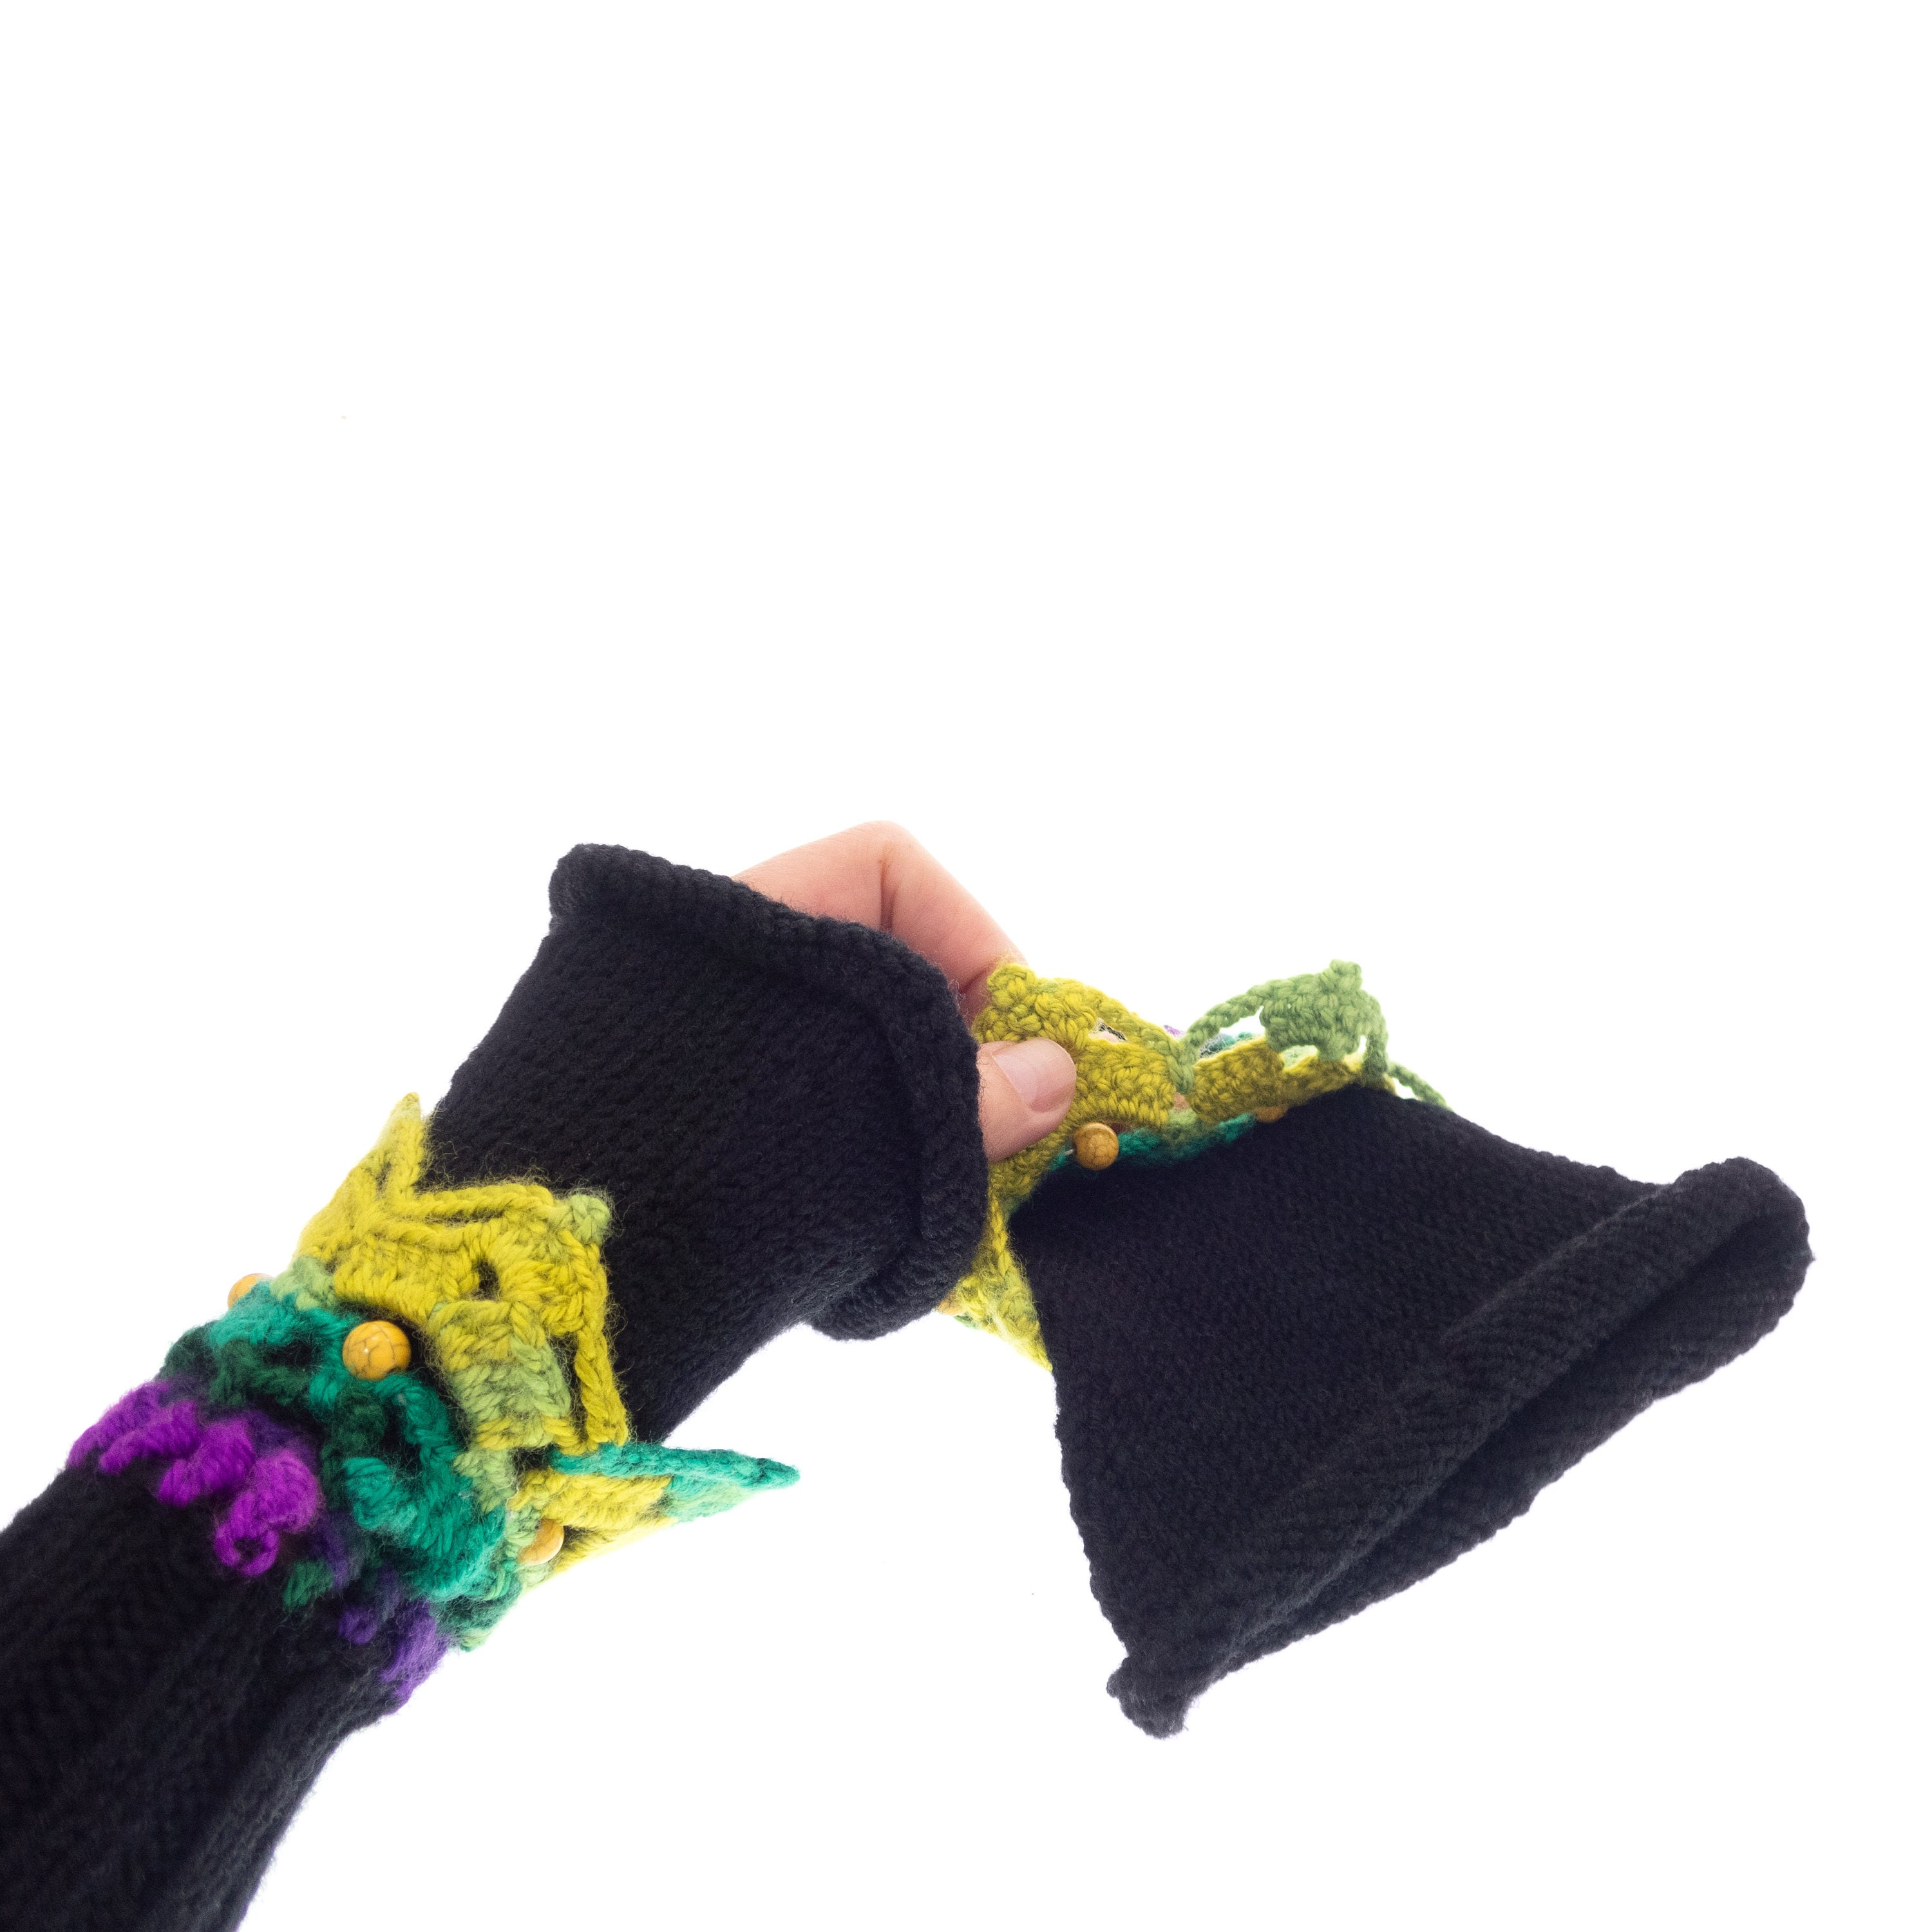 Gloves for Women. Woolen Hand Gloves for Ladies